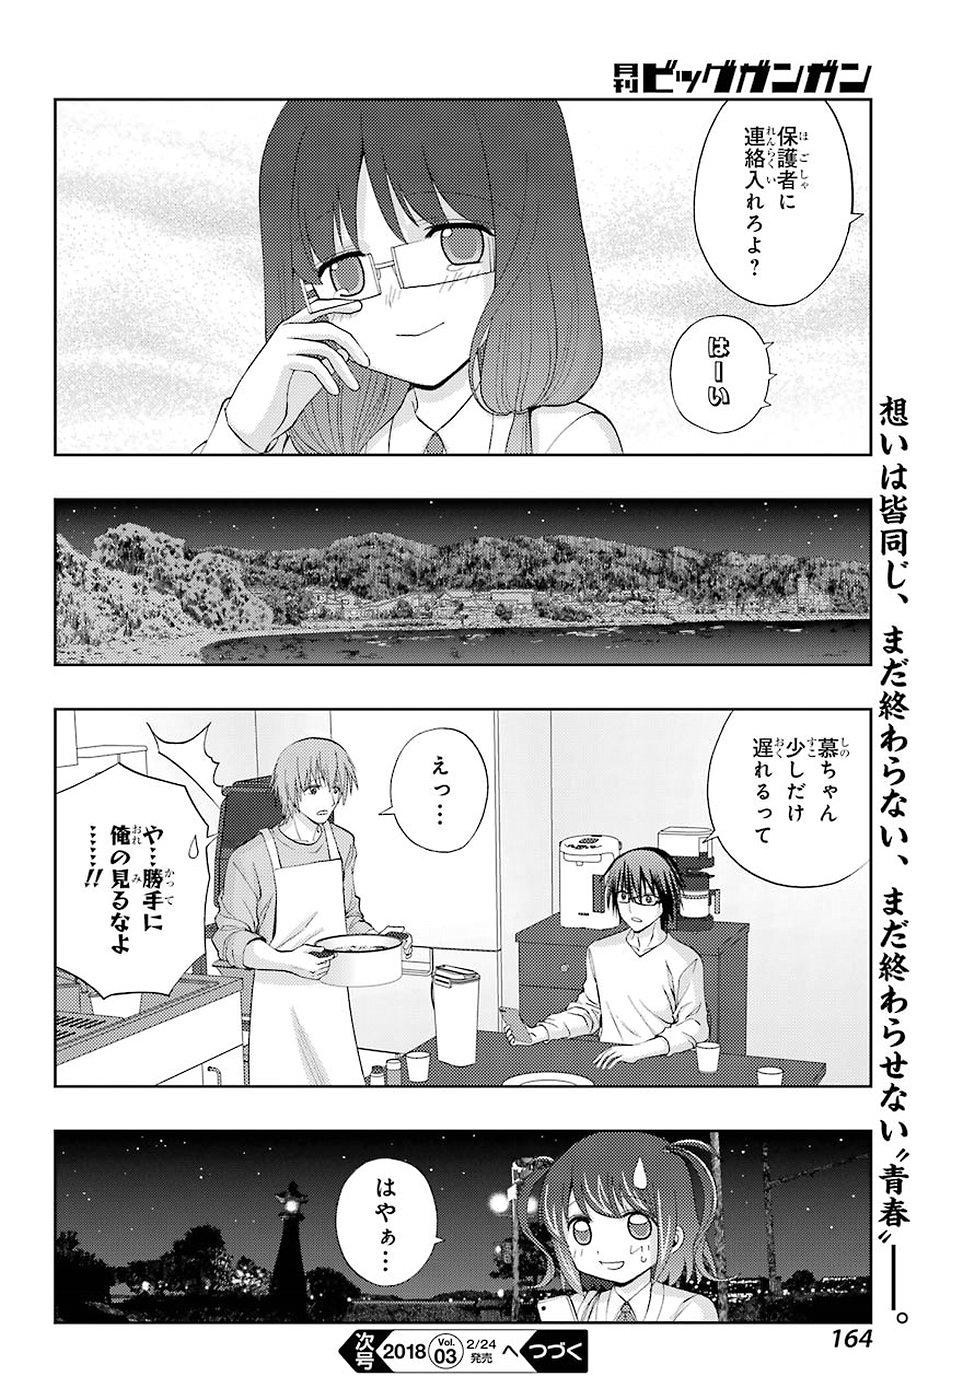 Shinohayu - The Dawn of Age Manga - Chapter 053 - Page 31